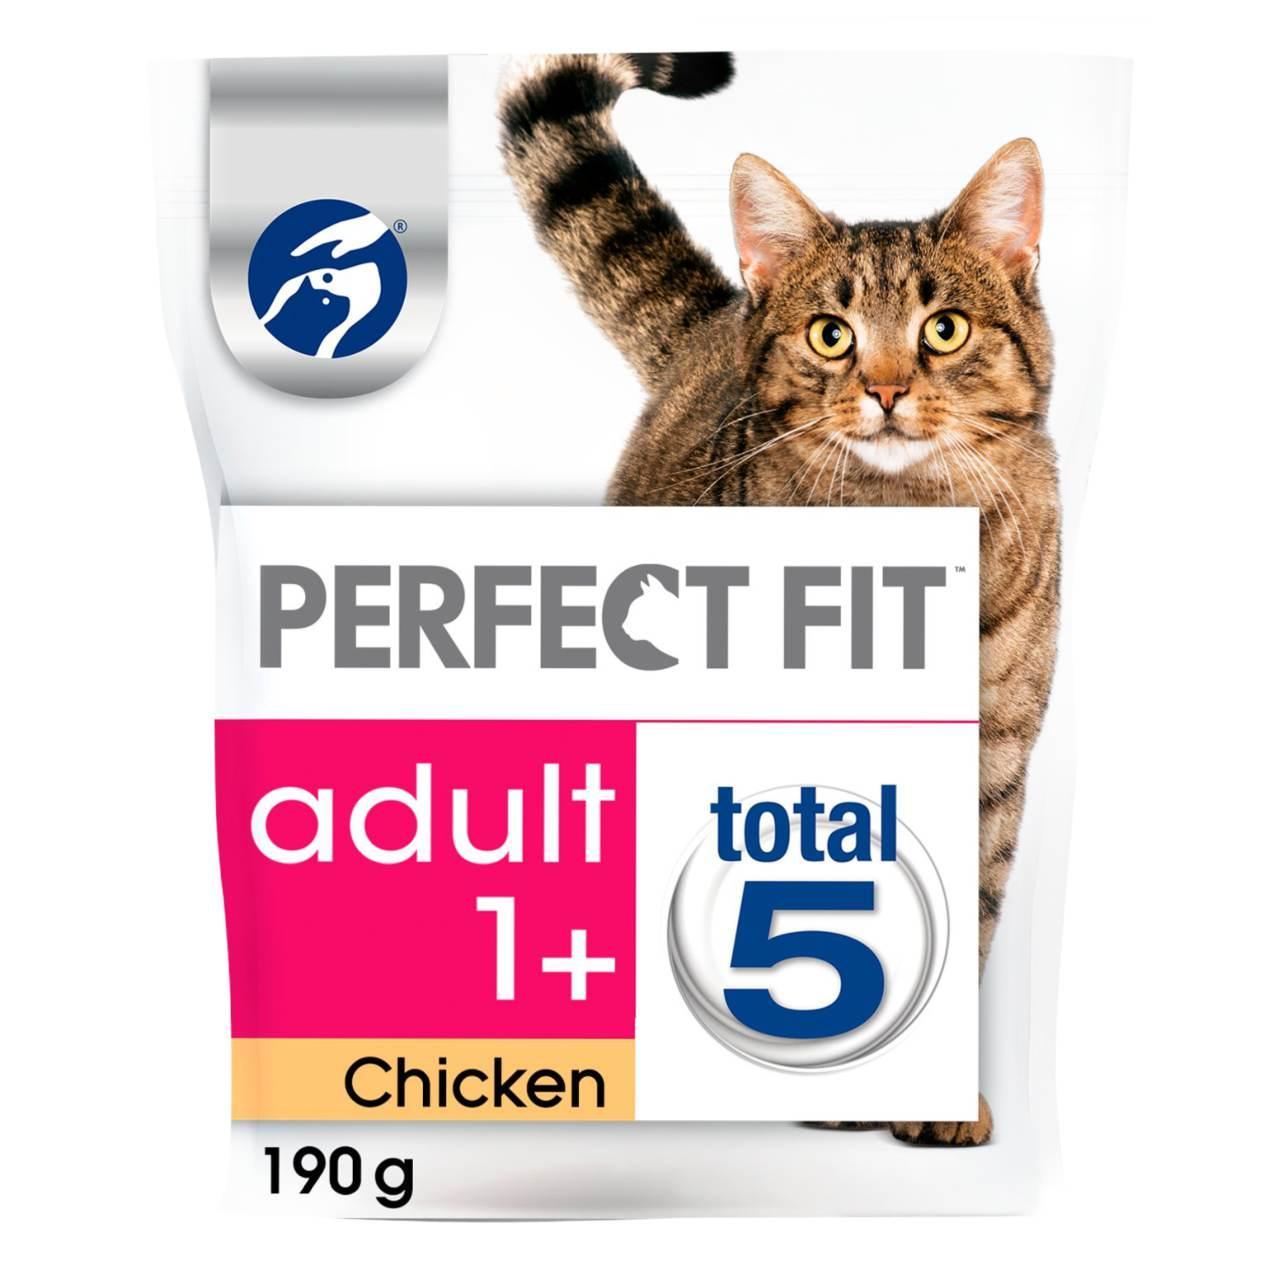 Pefect Fit Free Cat Food